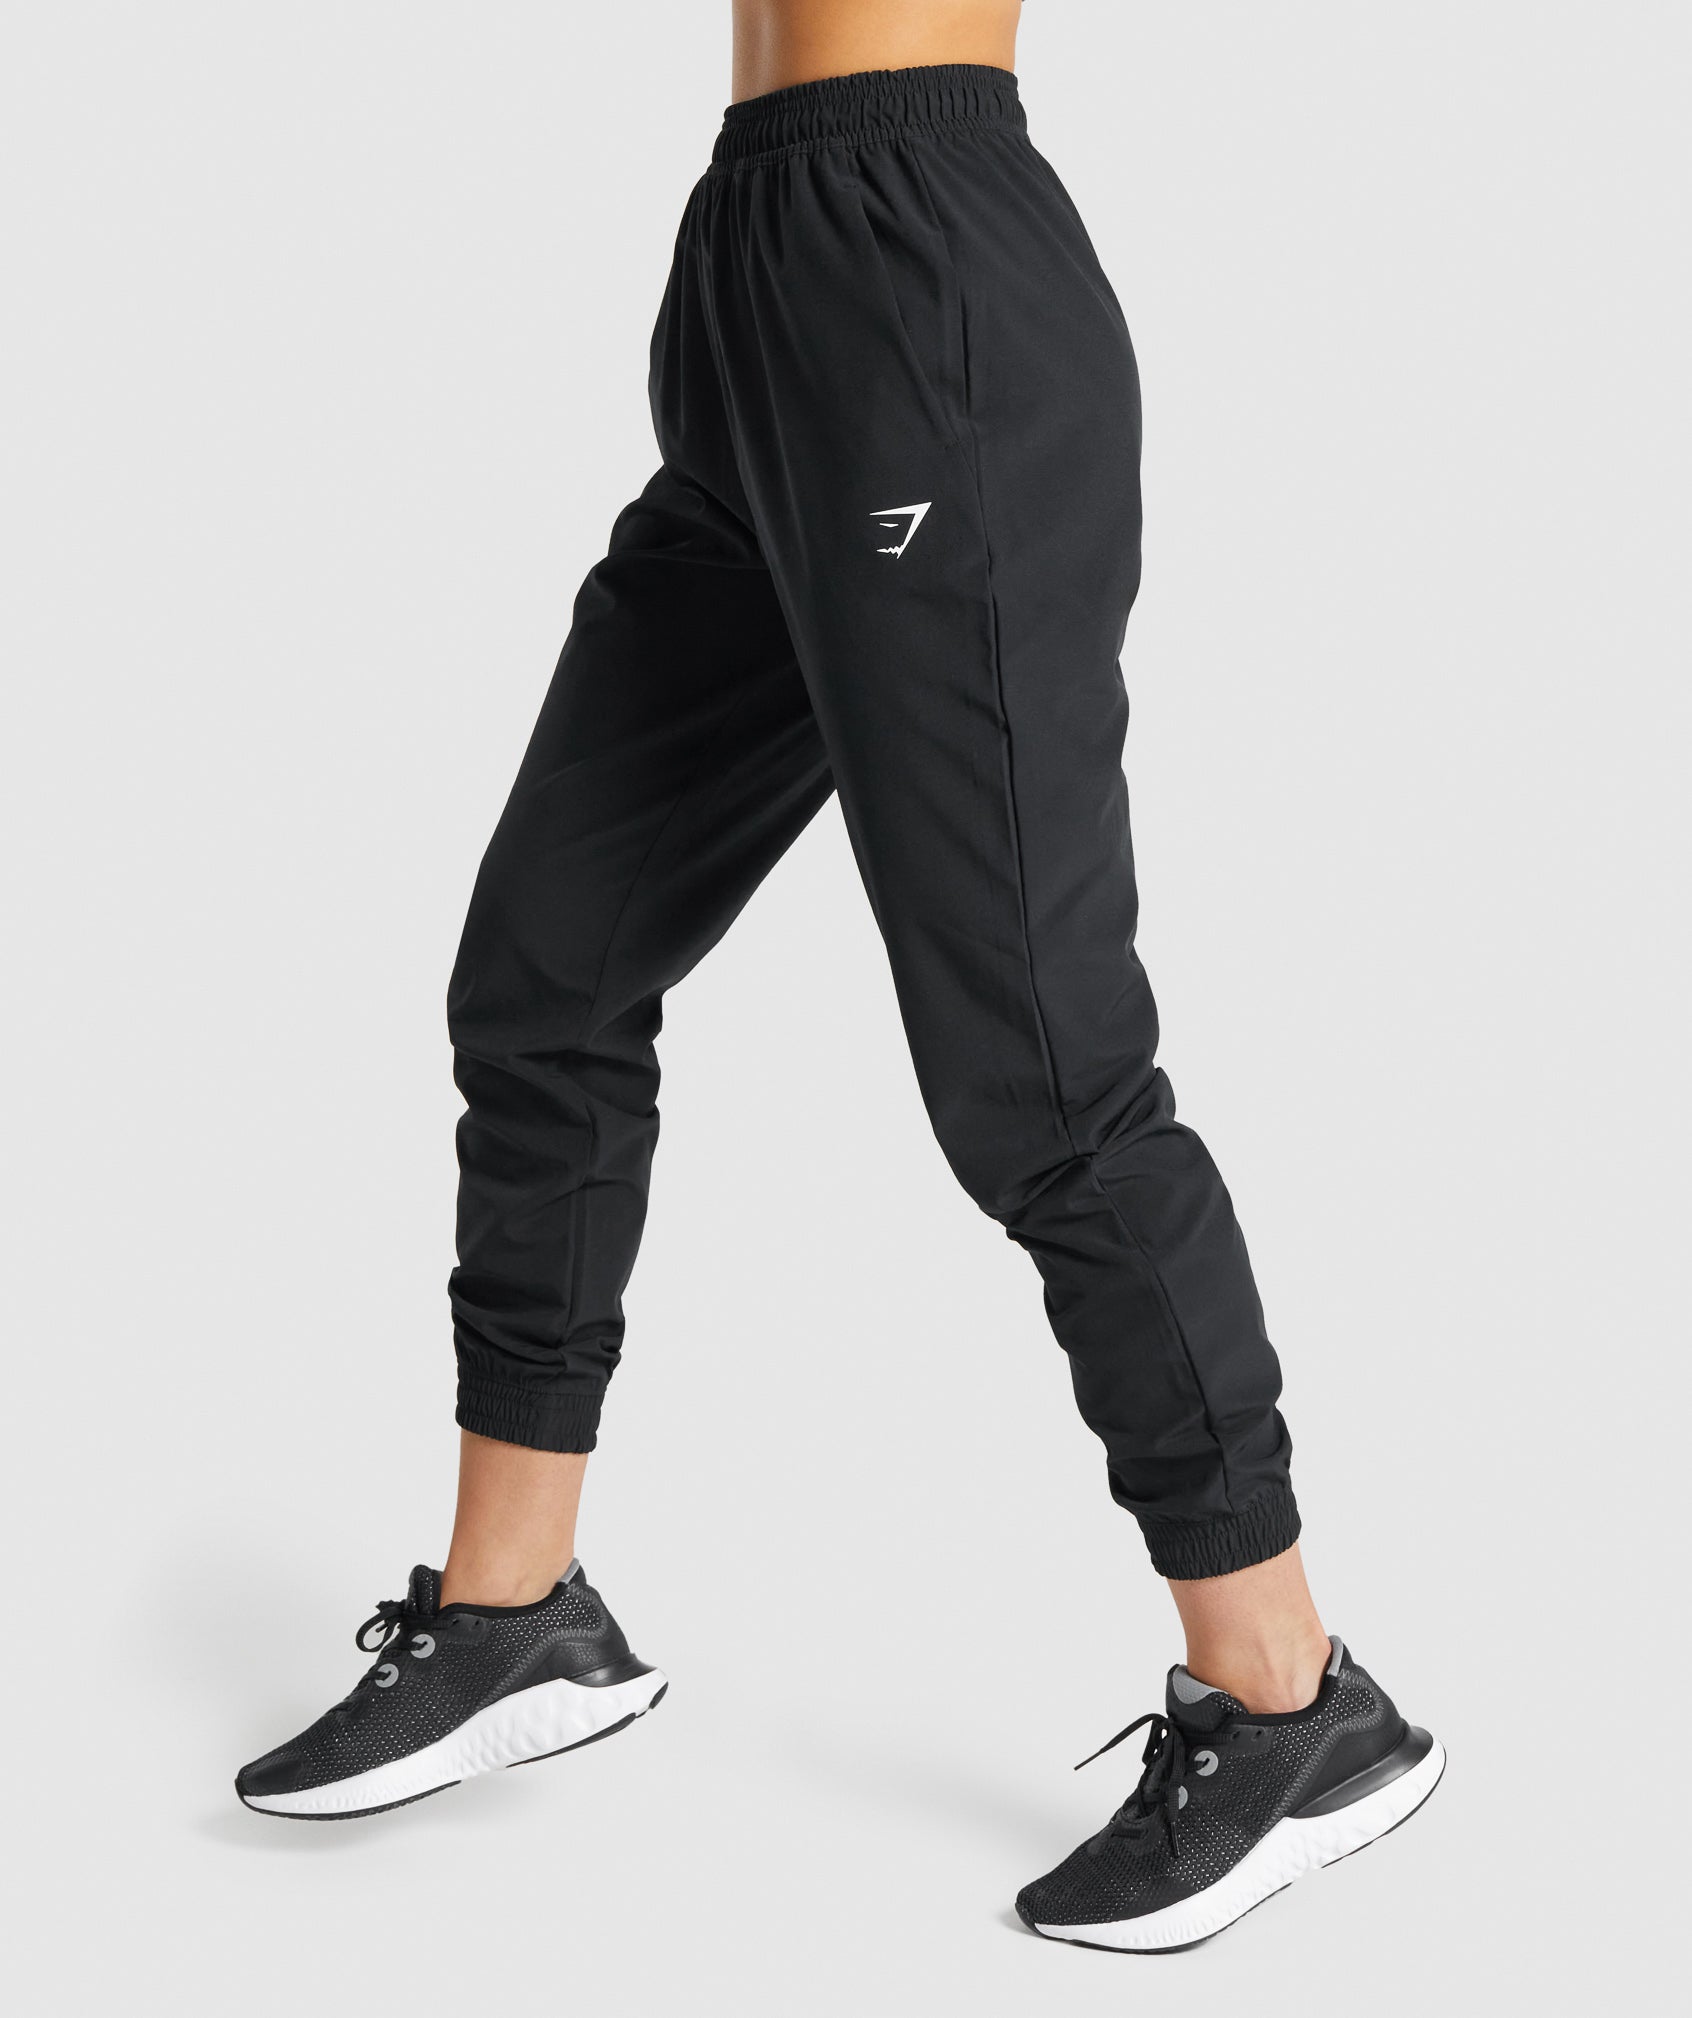 Black sweat pants SaunaLifter for women